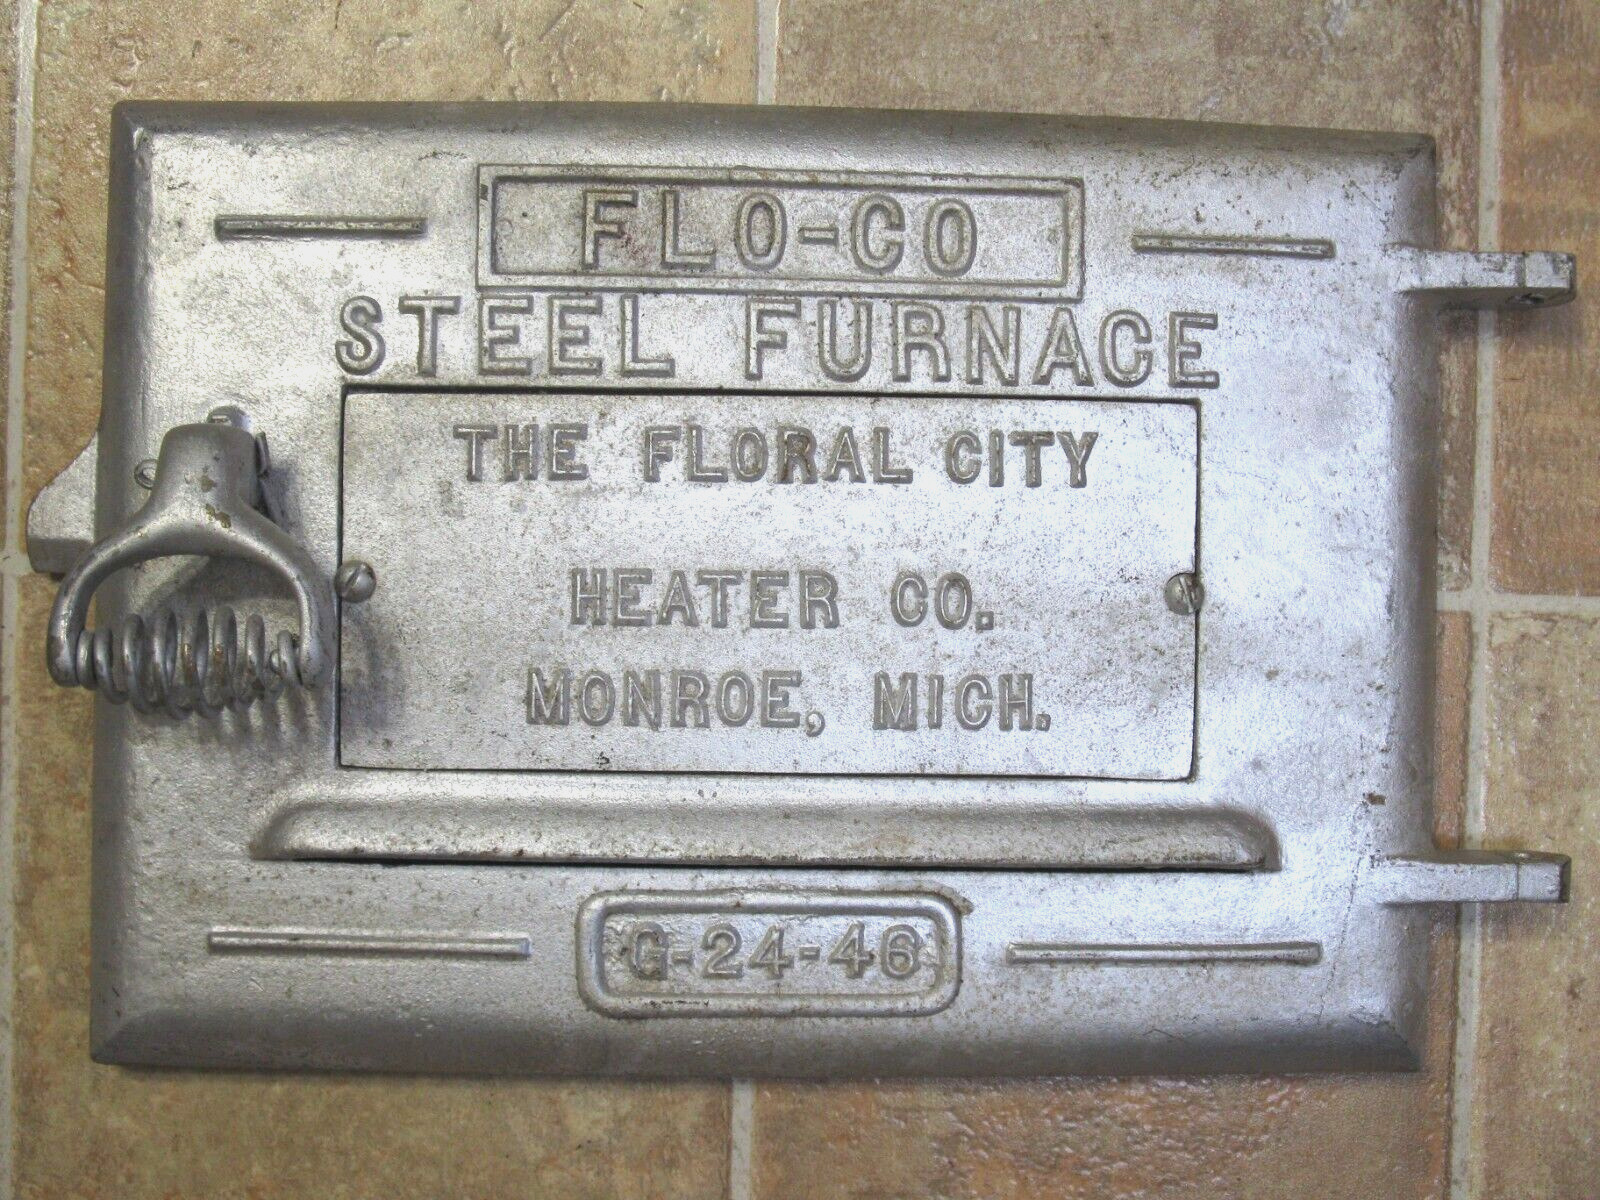 Cast Iron Stove Door ONLY Flo-Go Steel Furnace Floral City Heater Co Monroe MI